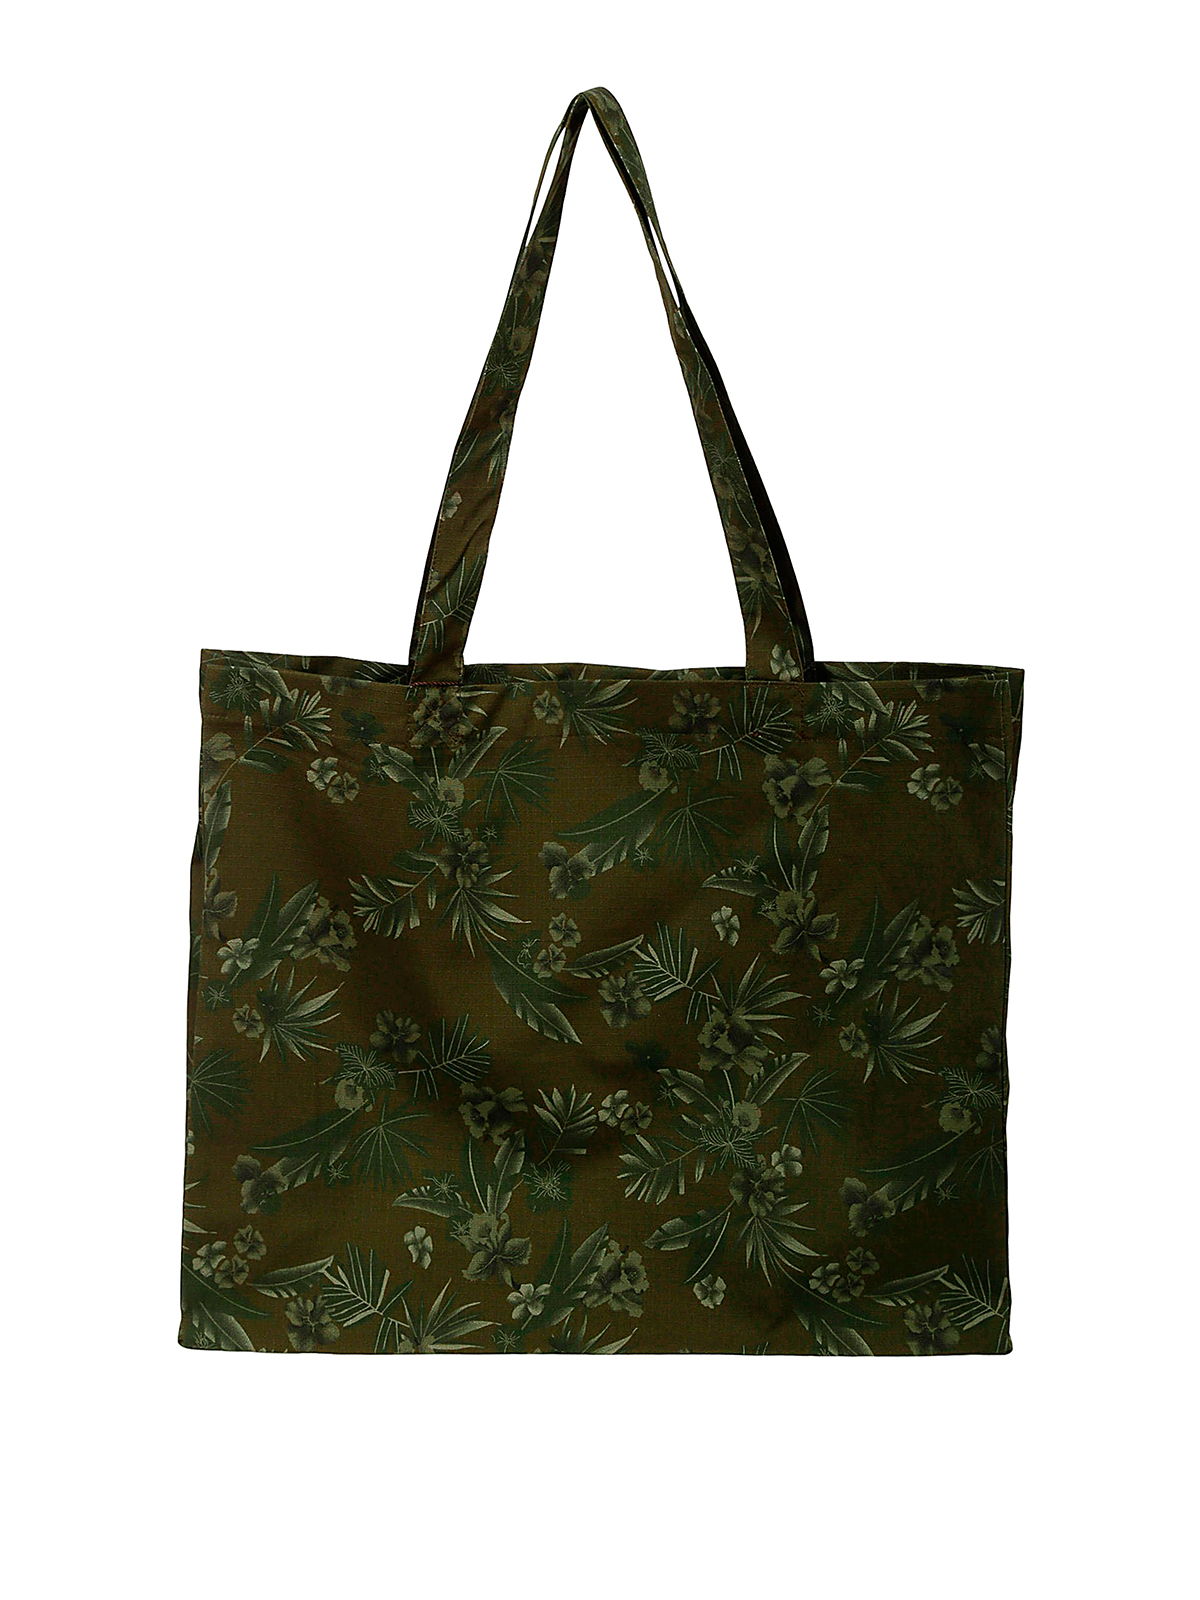 Totes bags A.P.C. - Diane tote - COEUKM61443JAA | Shop online at iKRIX